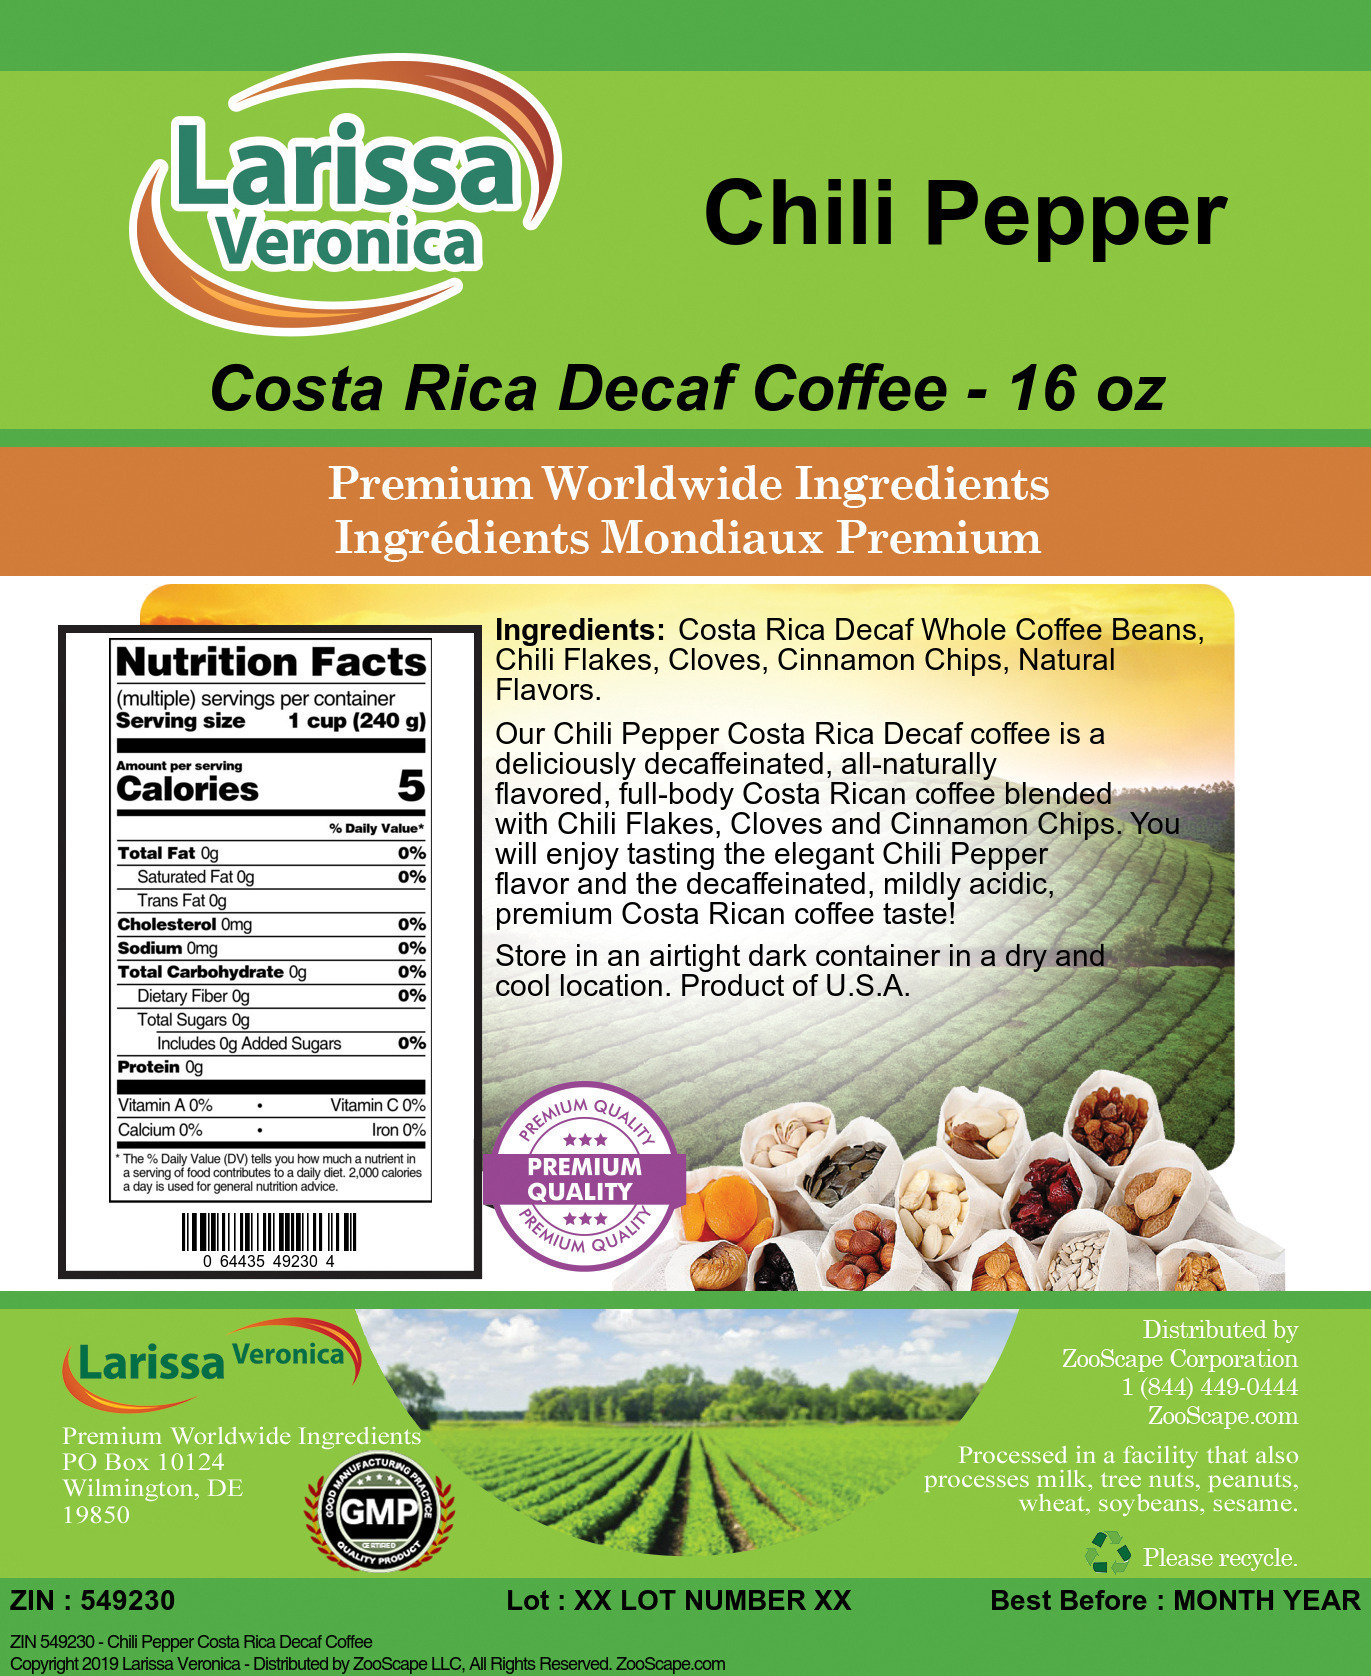 Chili Pepper Costa Rica Decaf Coffee - Label